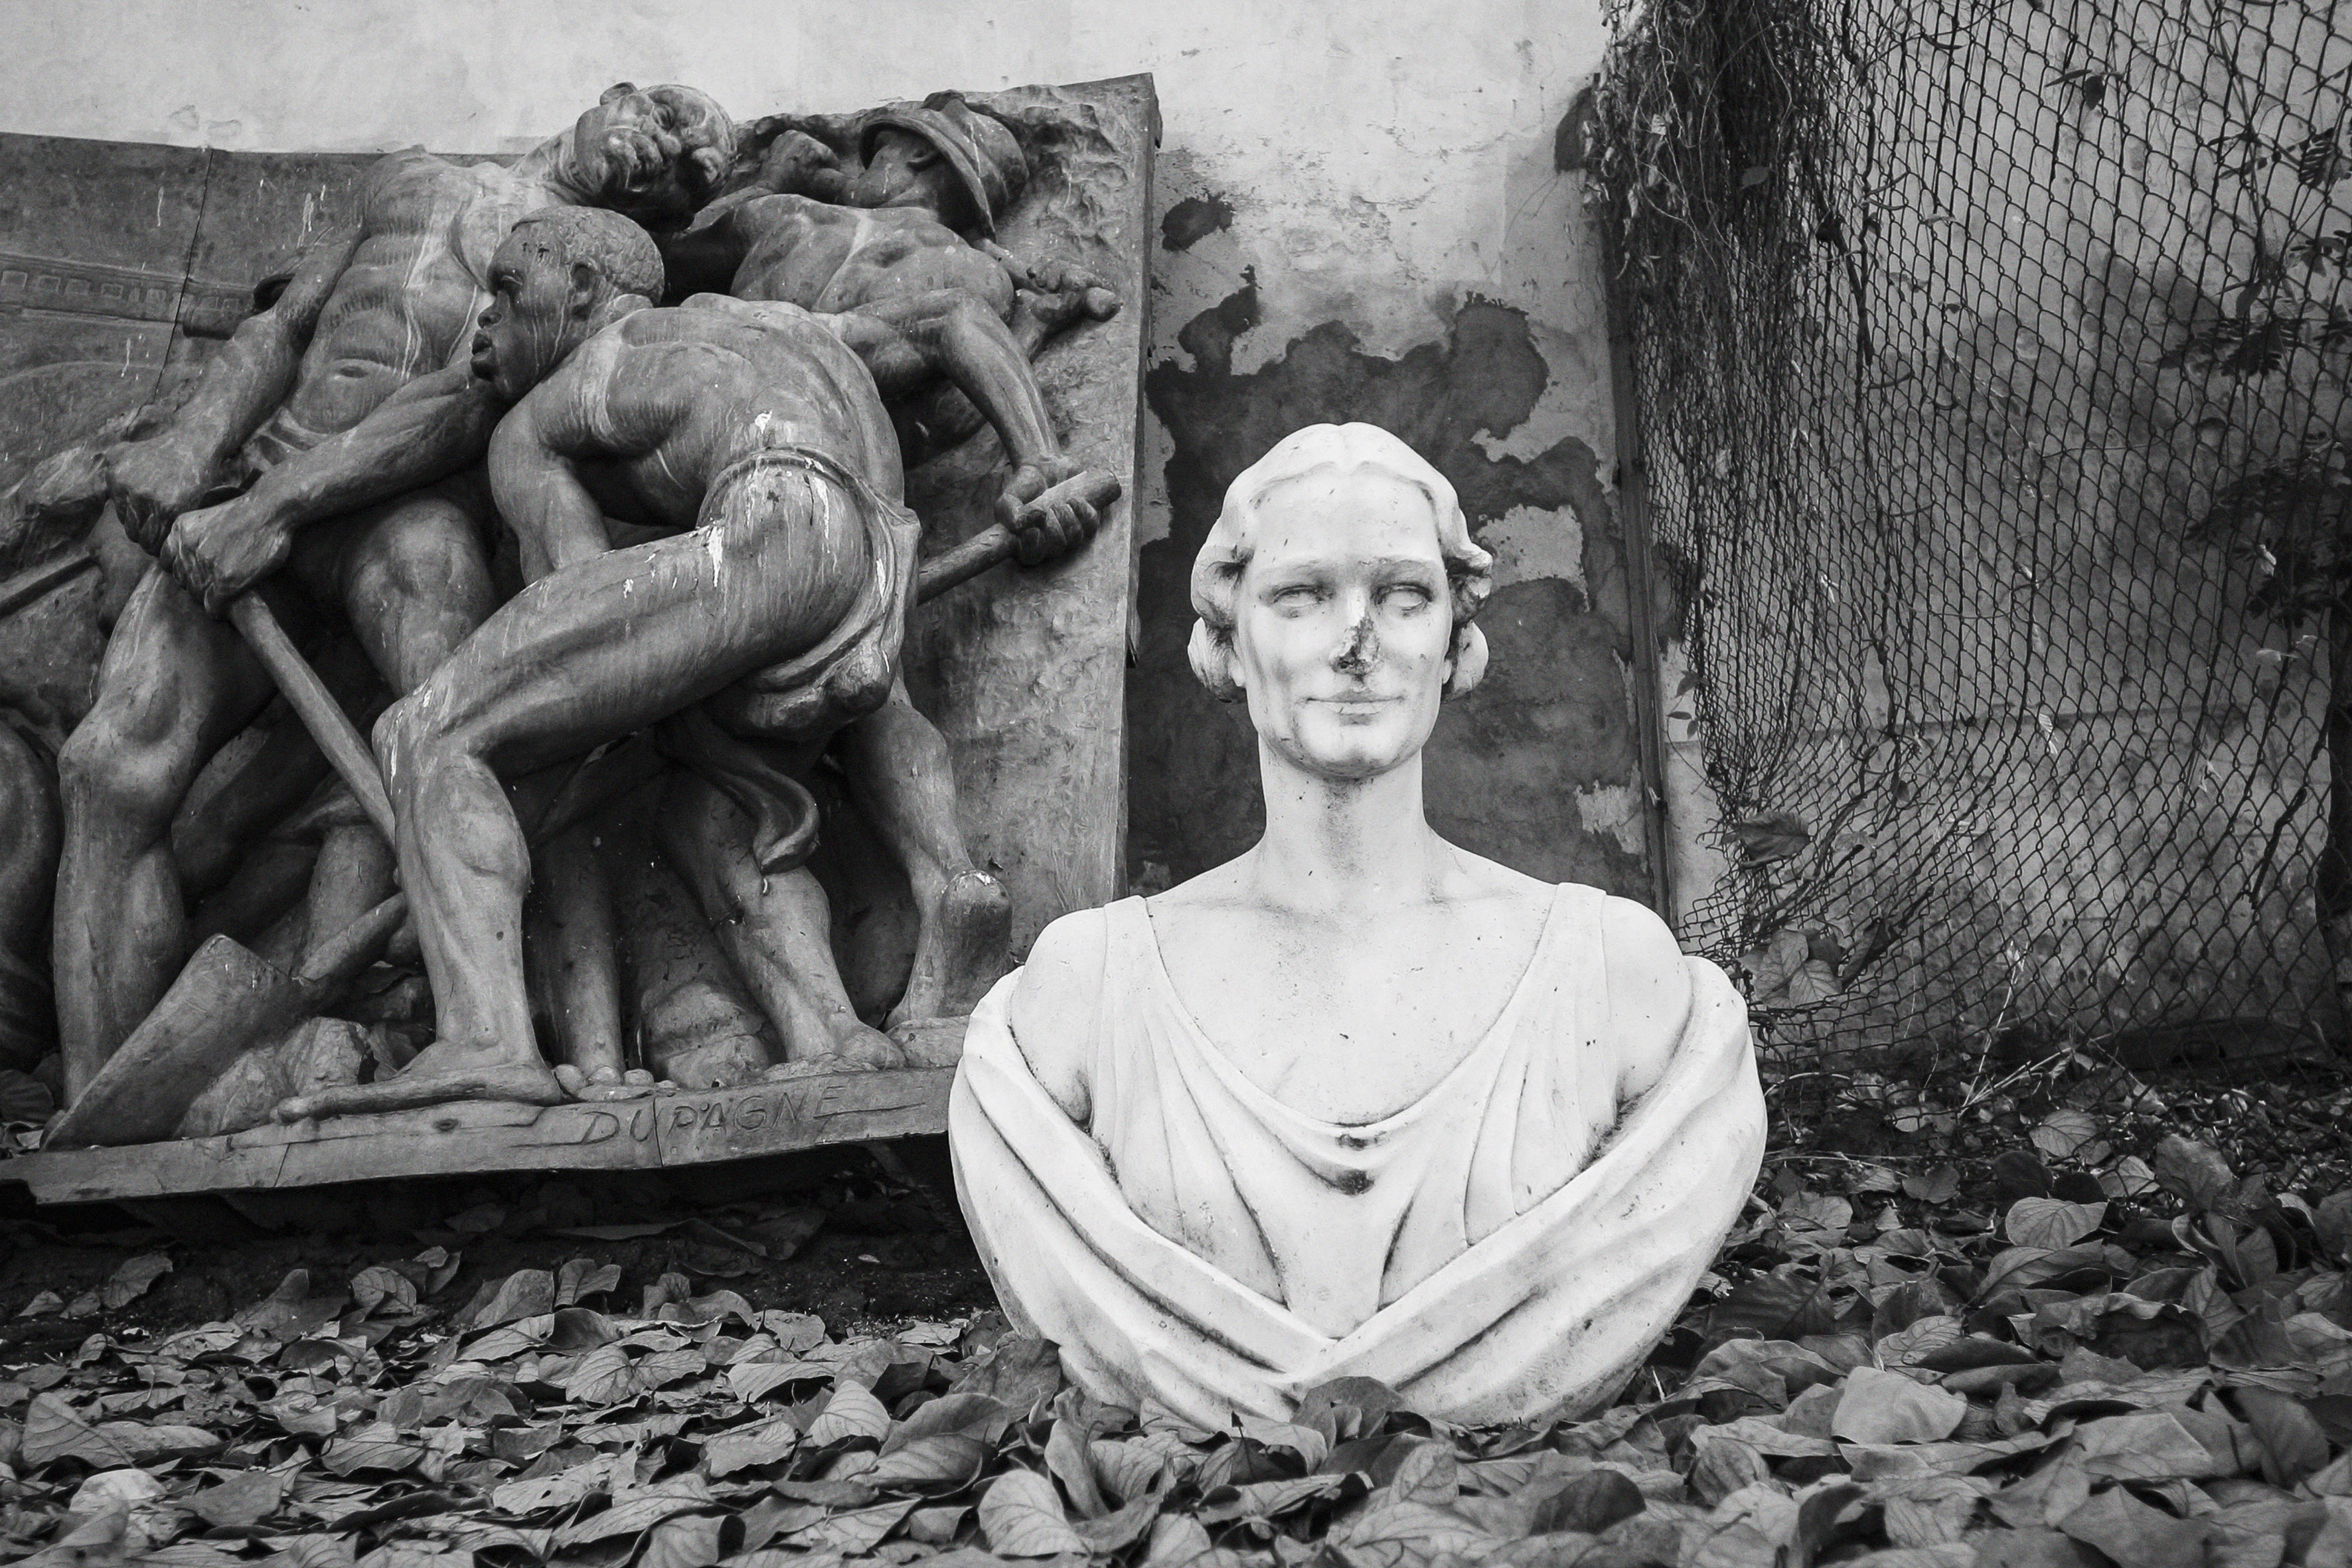  - Colonial era statue and memorial in storage, Democratic Republic of Congo, 2003